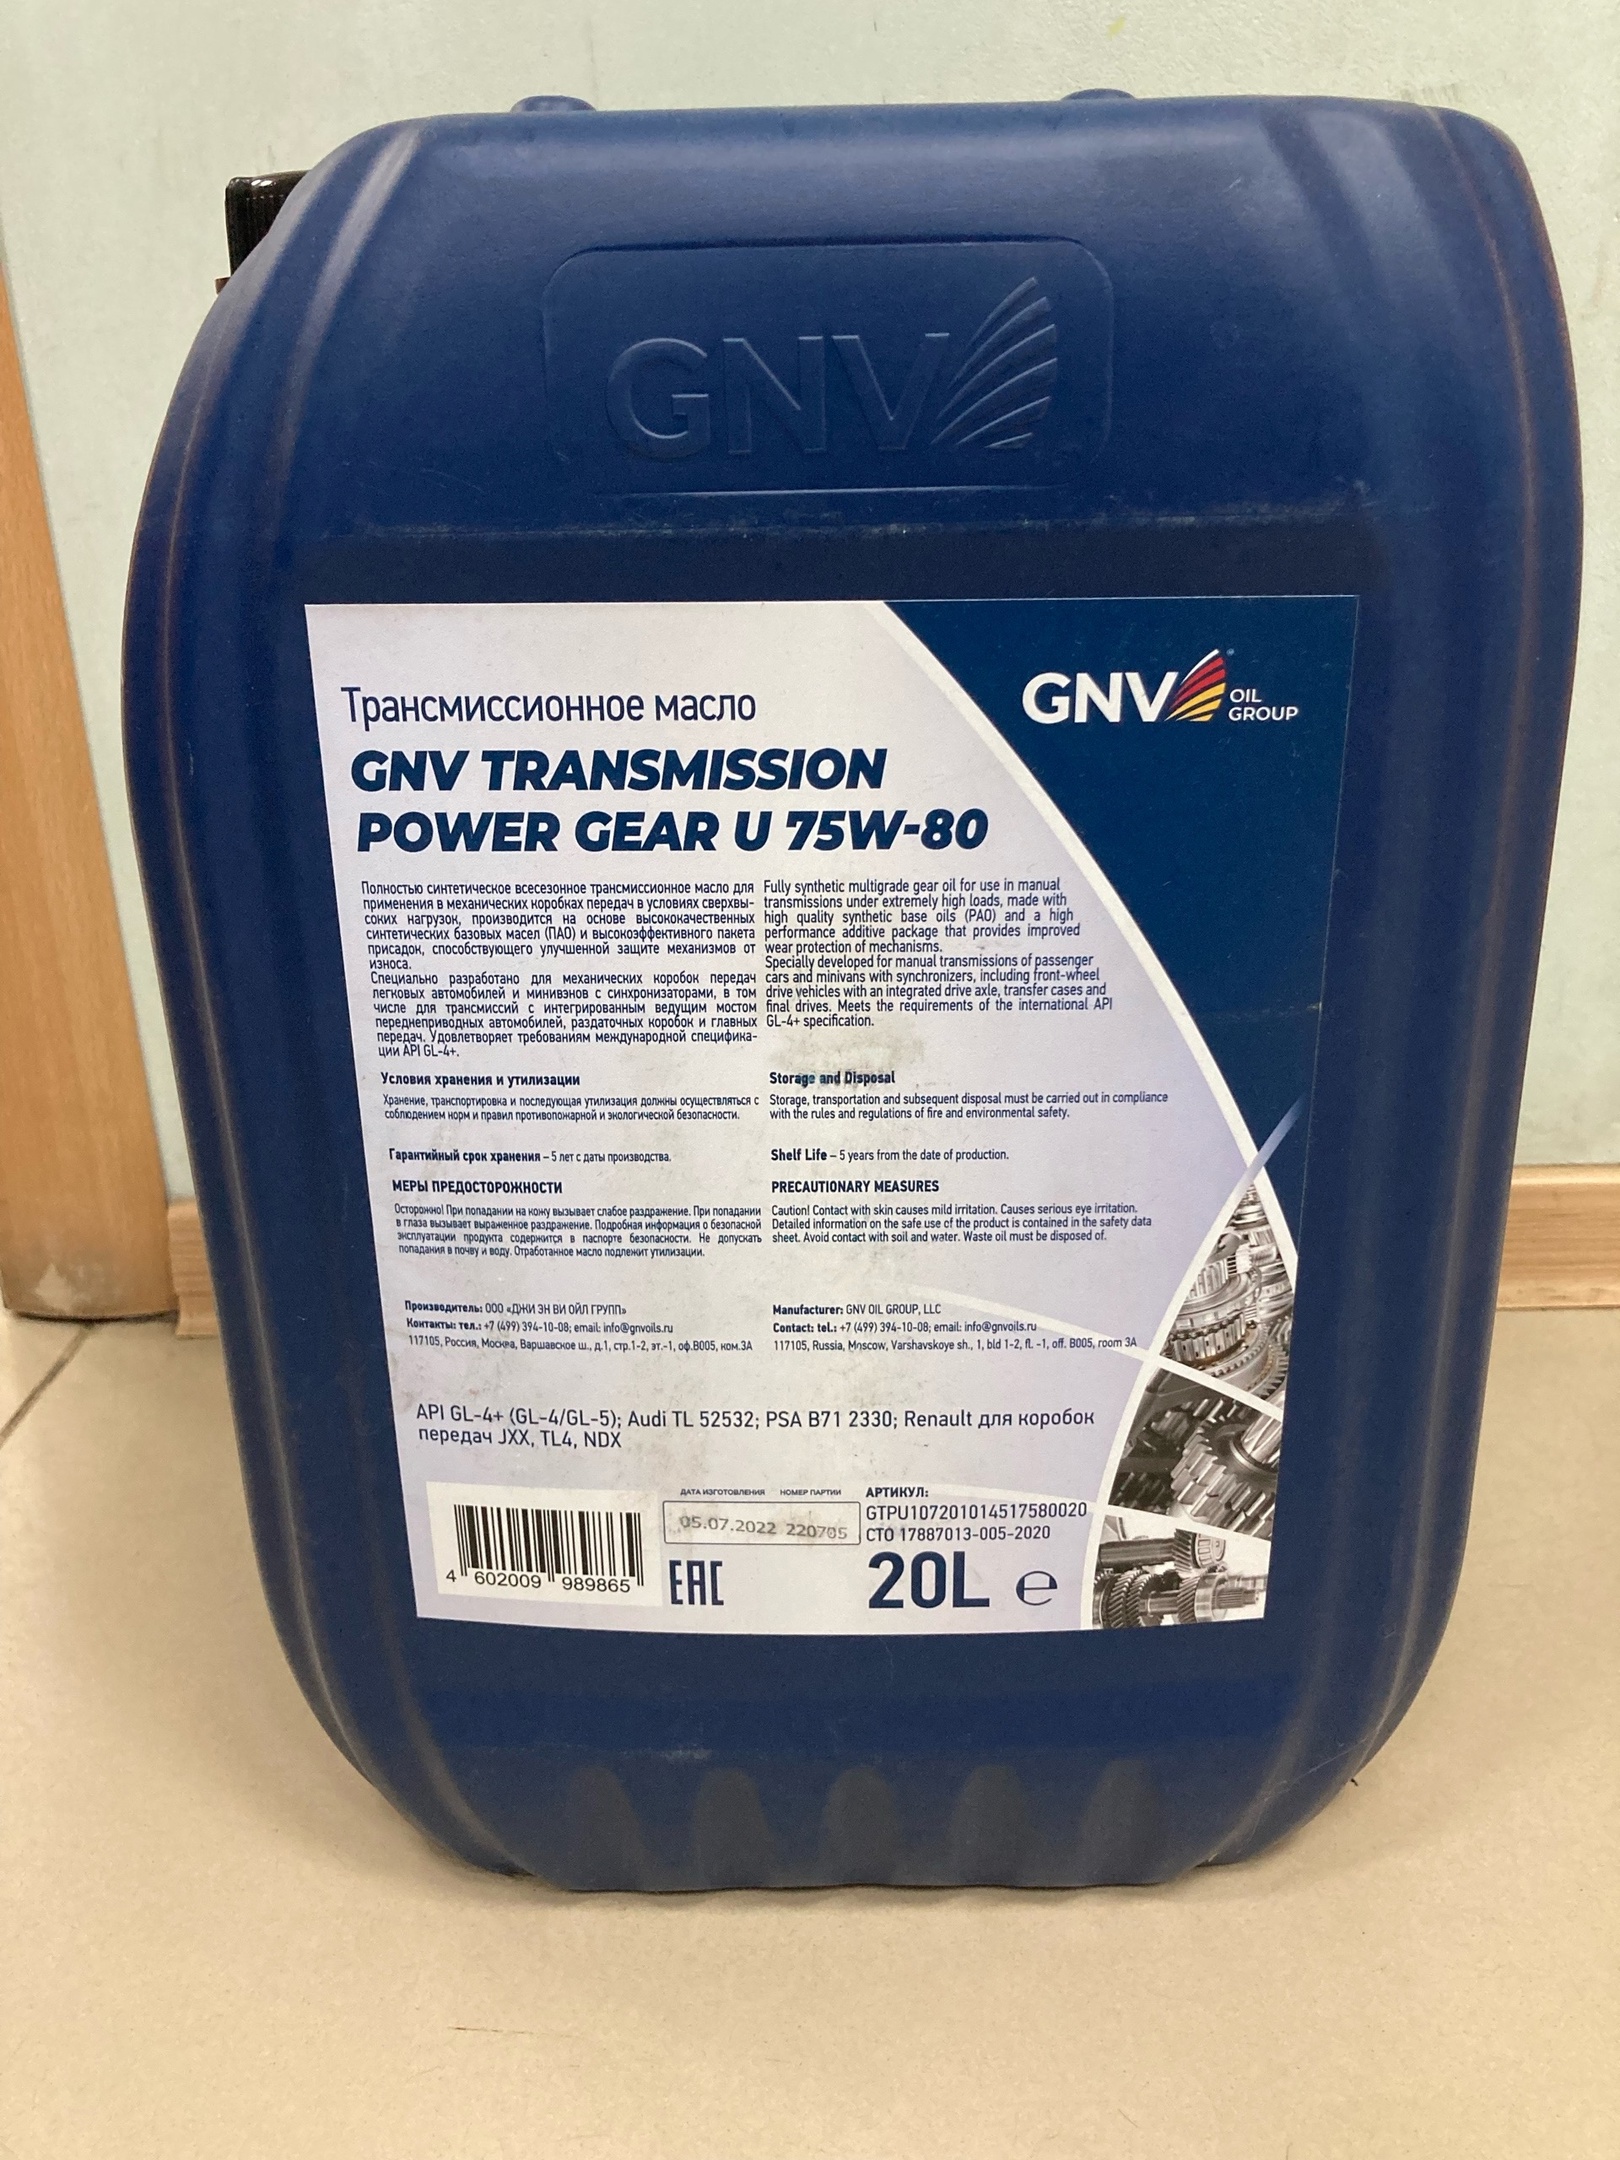 Transmission Power Gear U 75W-80  20л   GL-4  трансмиссионное масло GNV  NFJ/BV